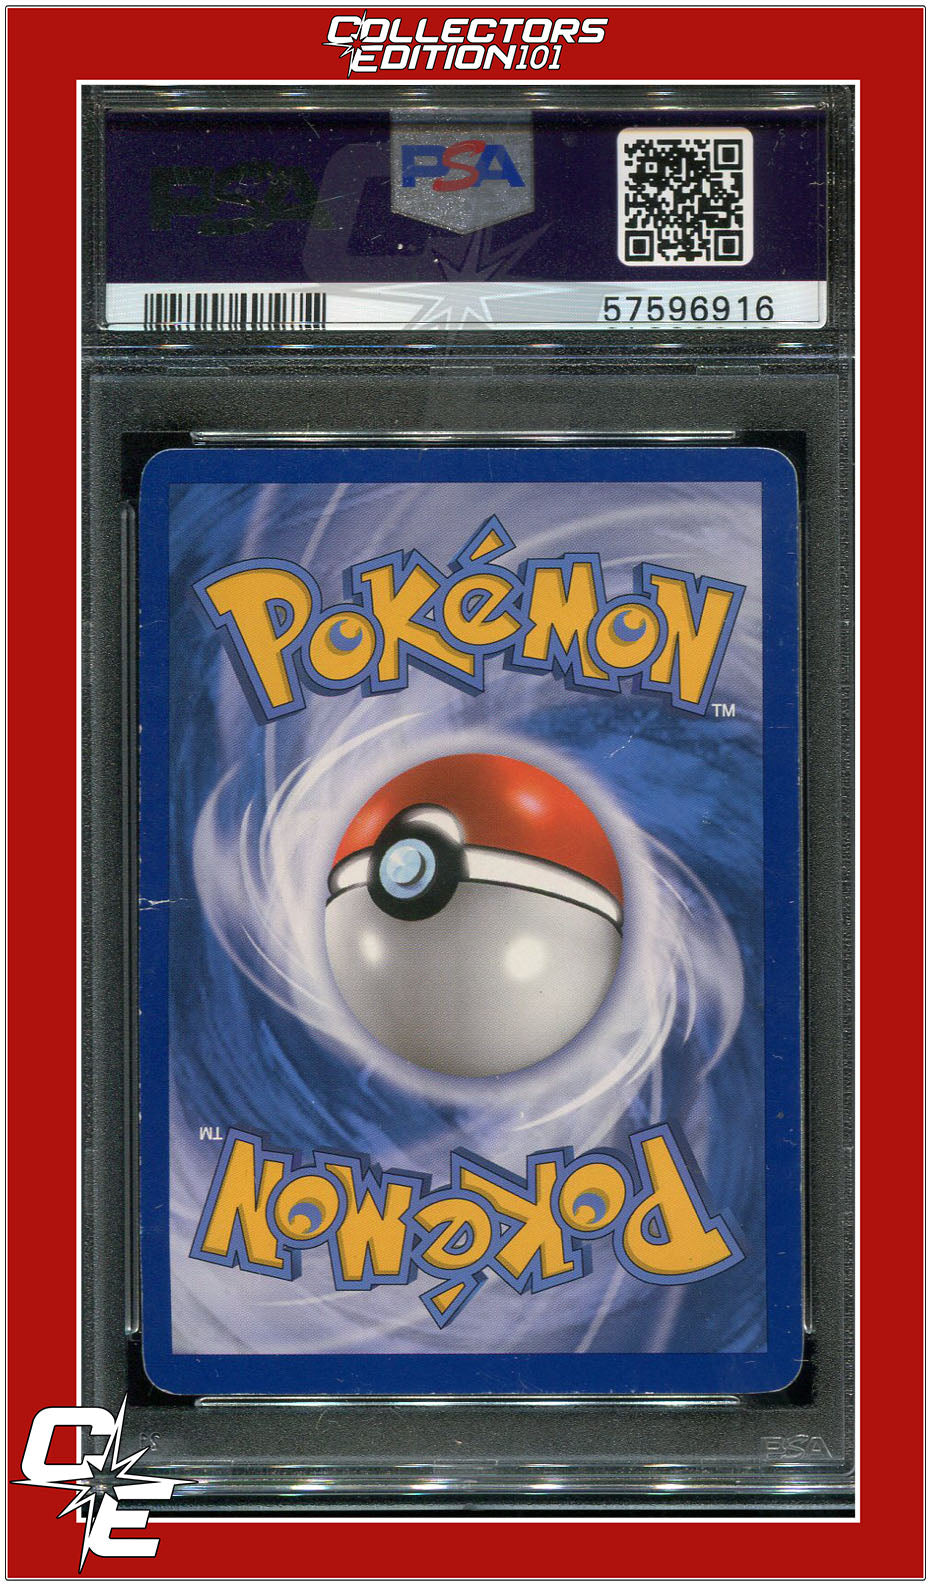 Arceus LV.X - Platinum Arceus Pokémon card 94/99